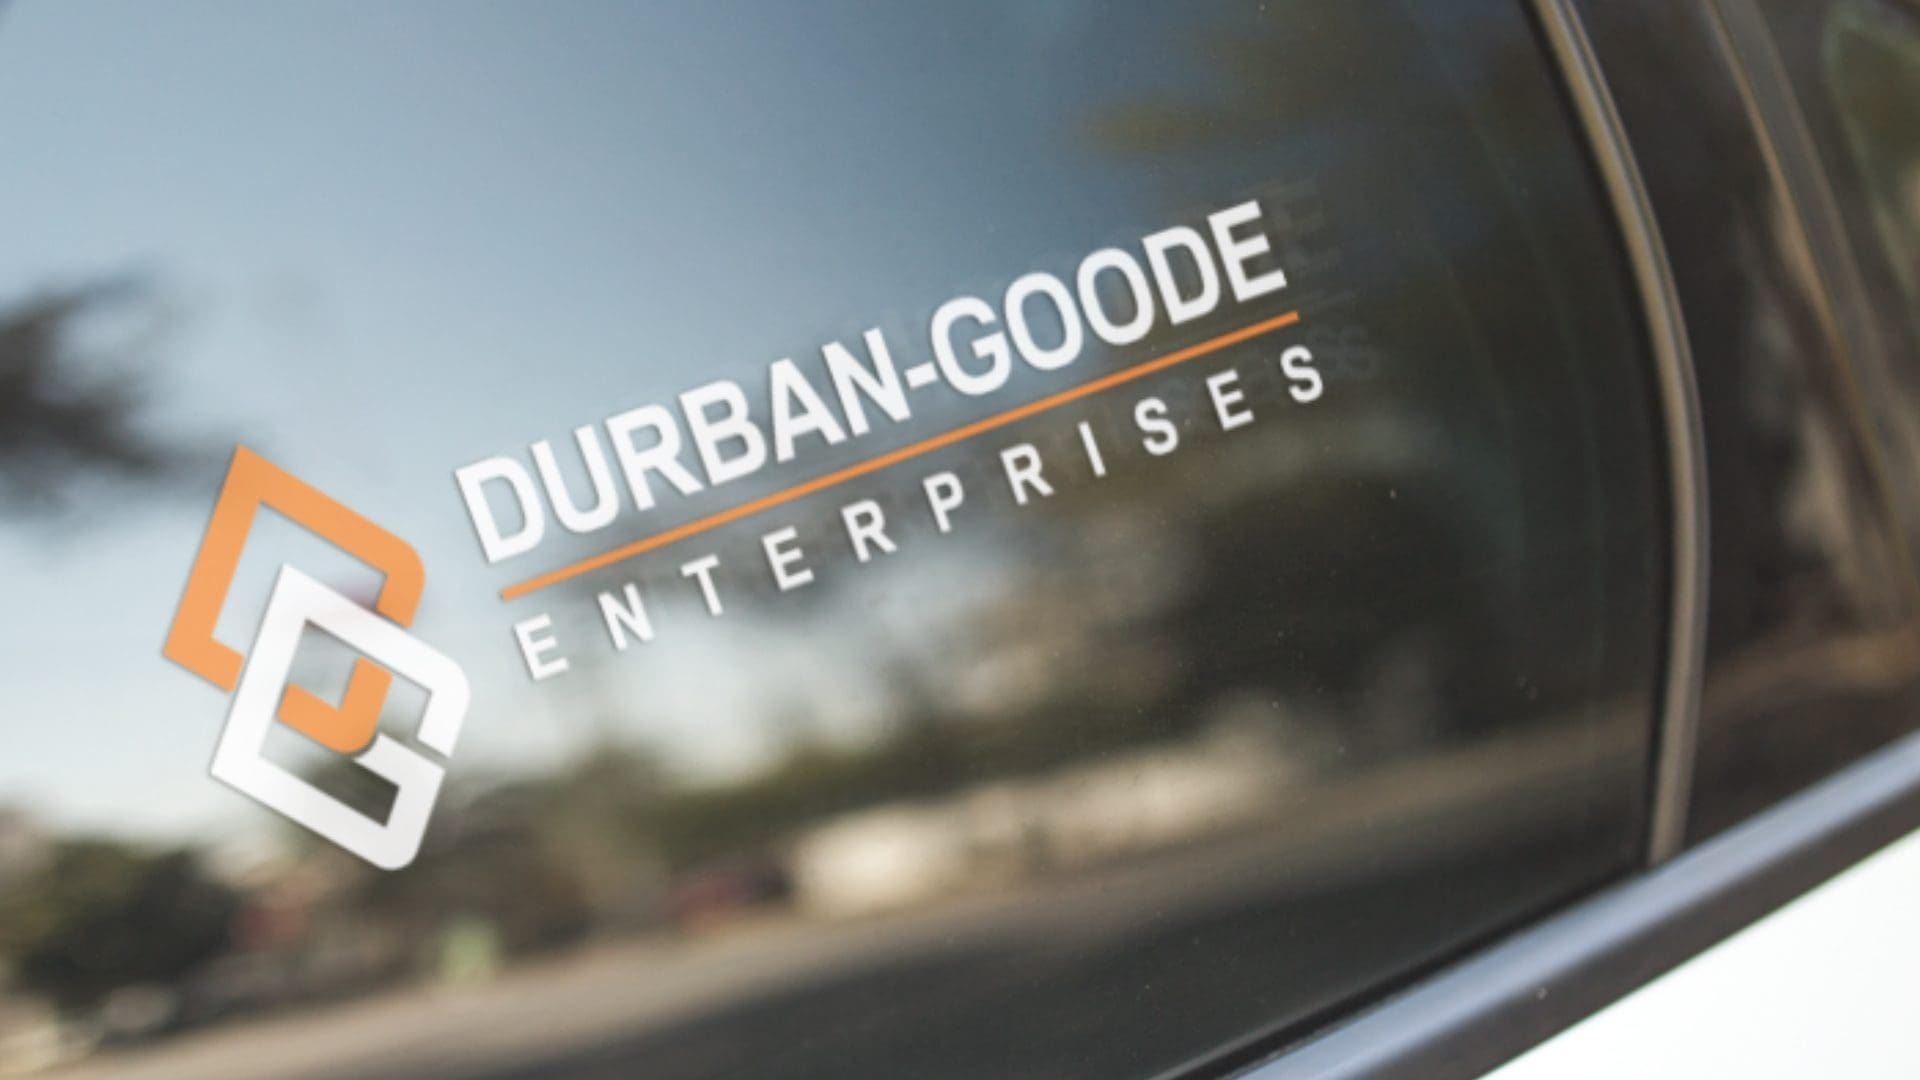 Durban-Goode Enterprises - 2021 Logo (6)